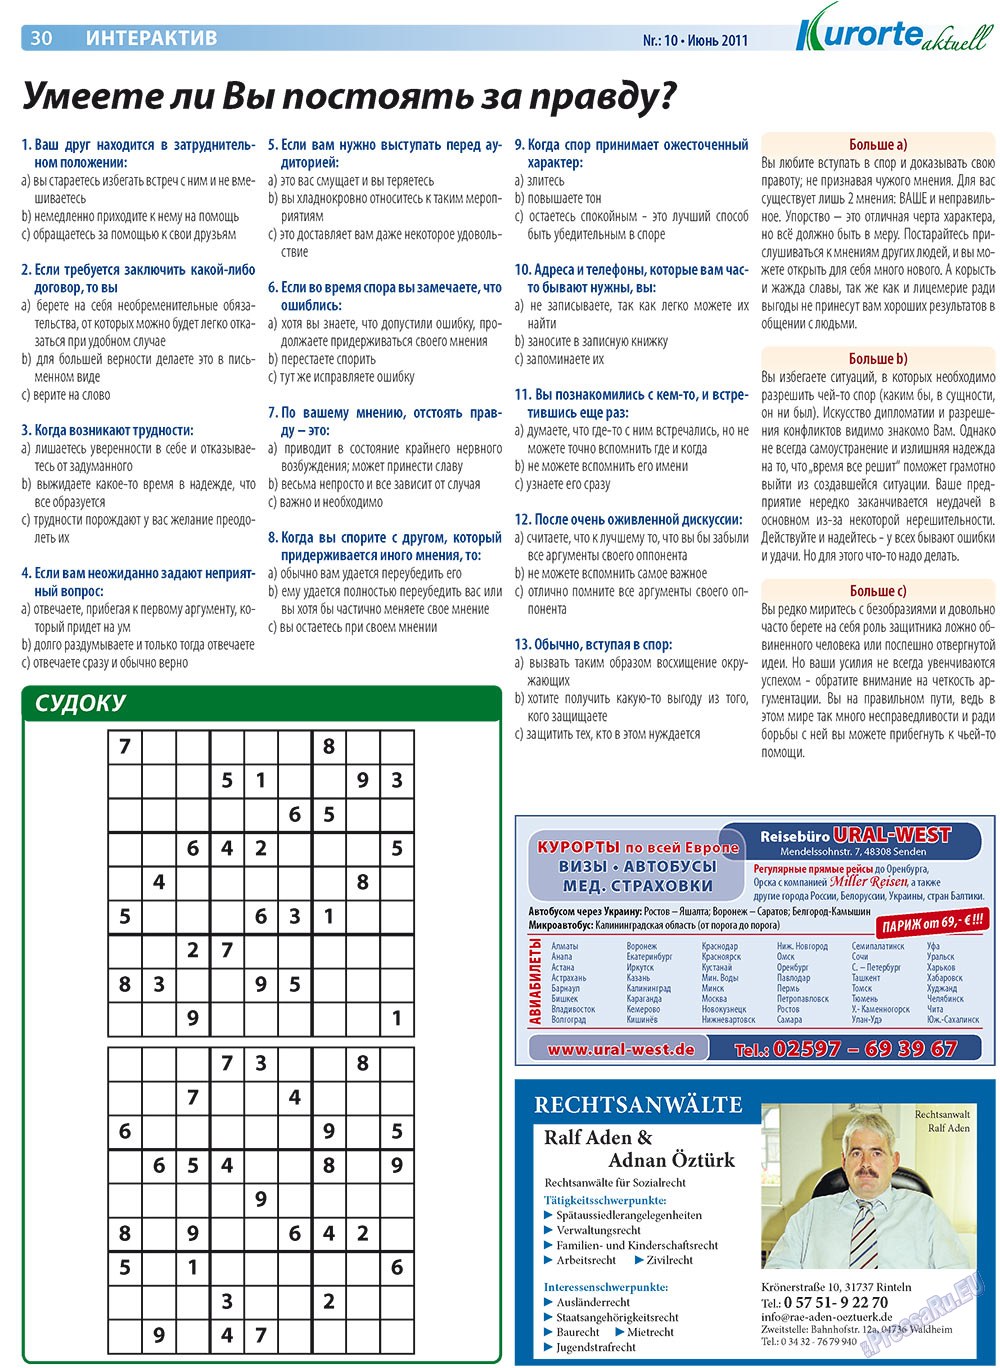 Kurorte aktuell, газета. 2011 №6 стр.30